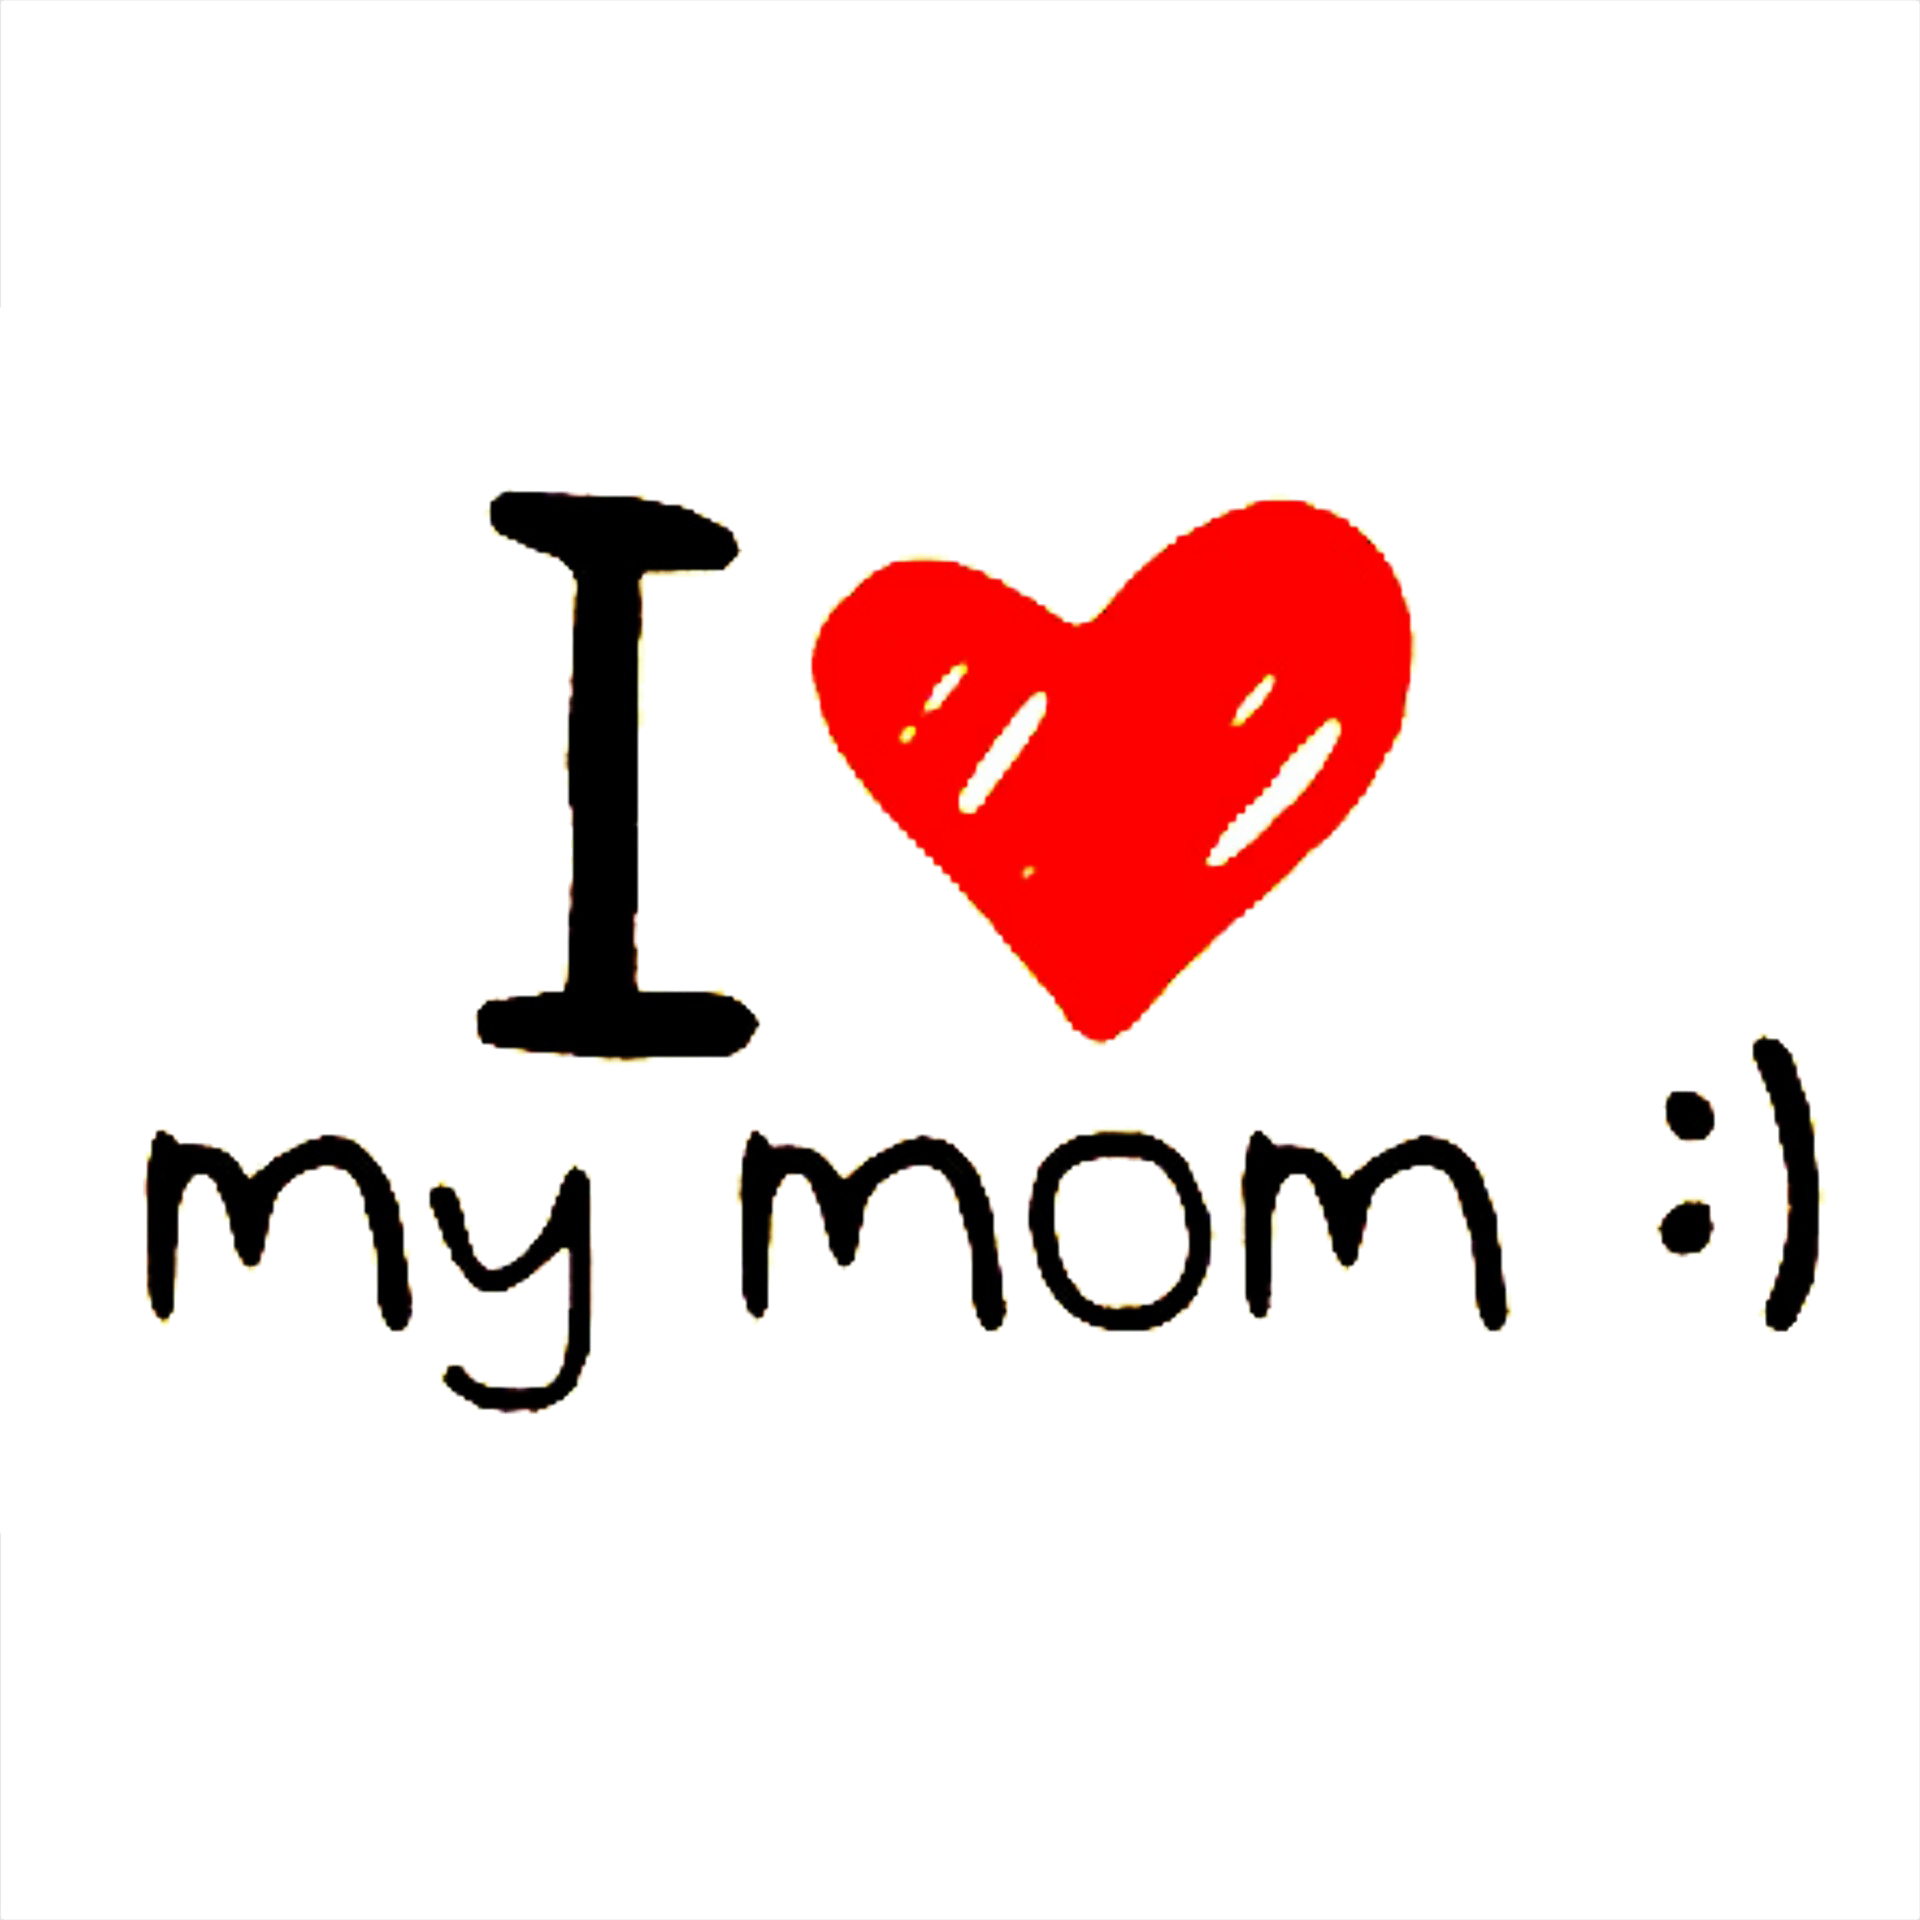 I Love You Mom Transparent Background PNG | PNG Arts